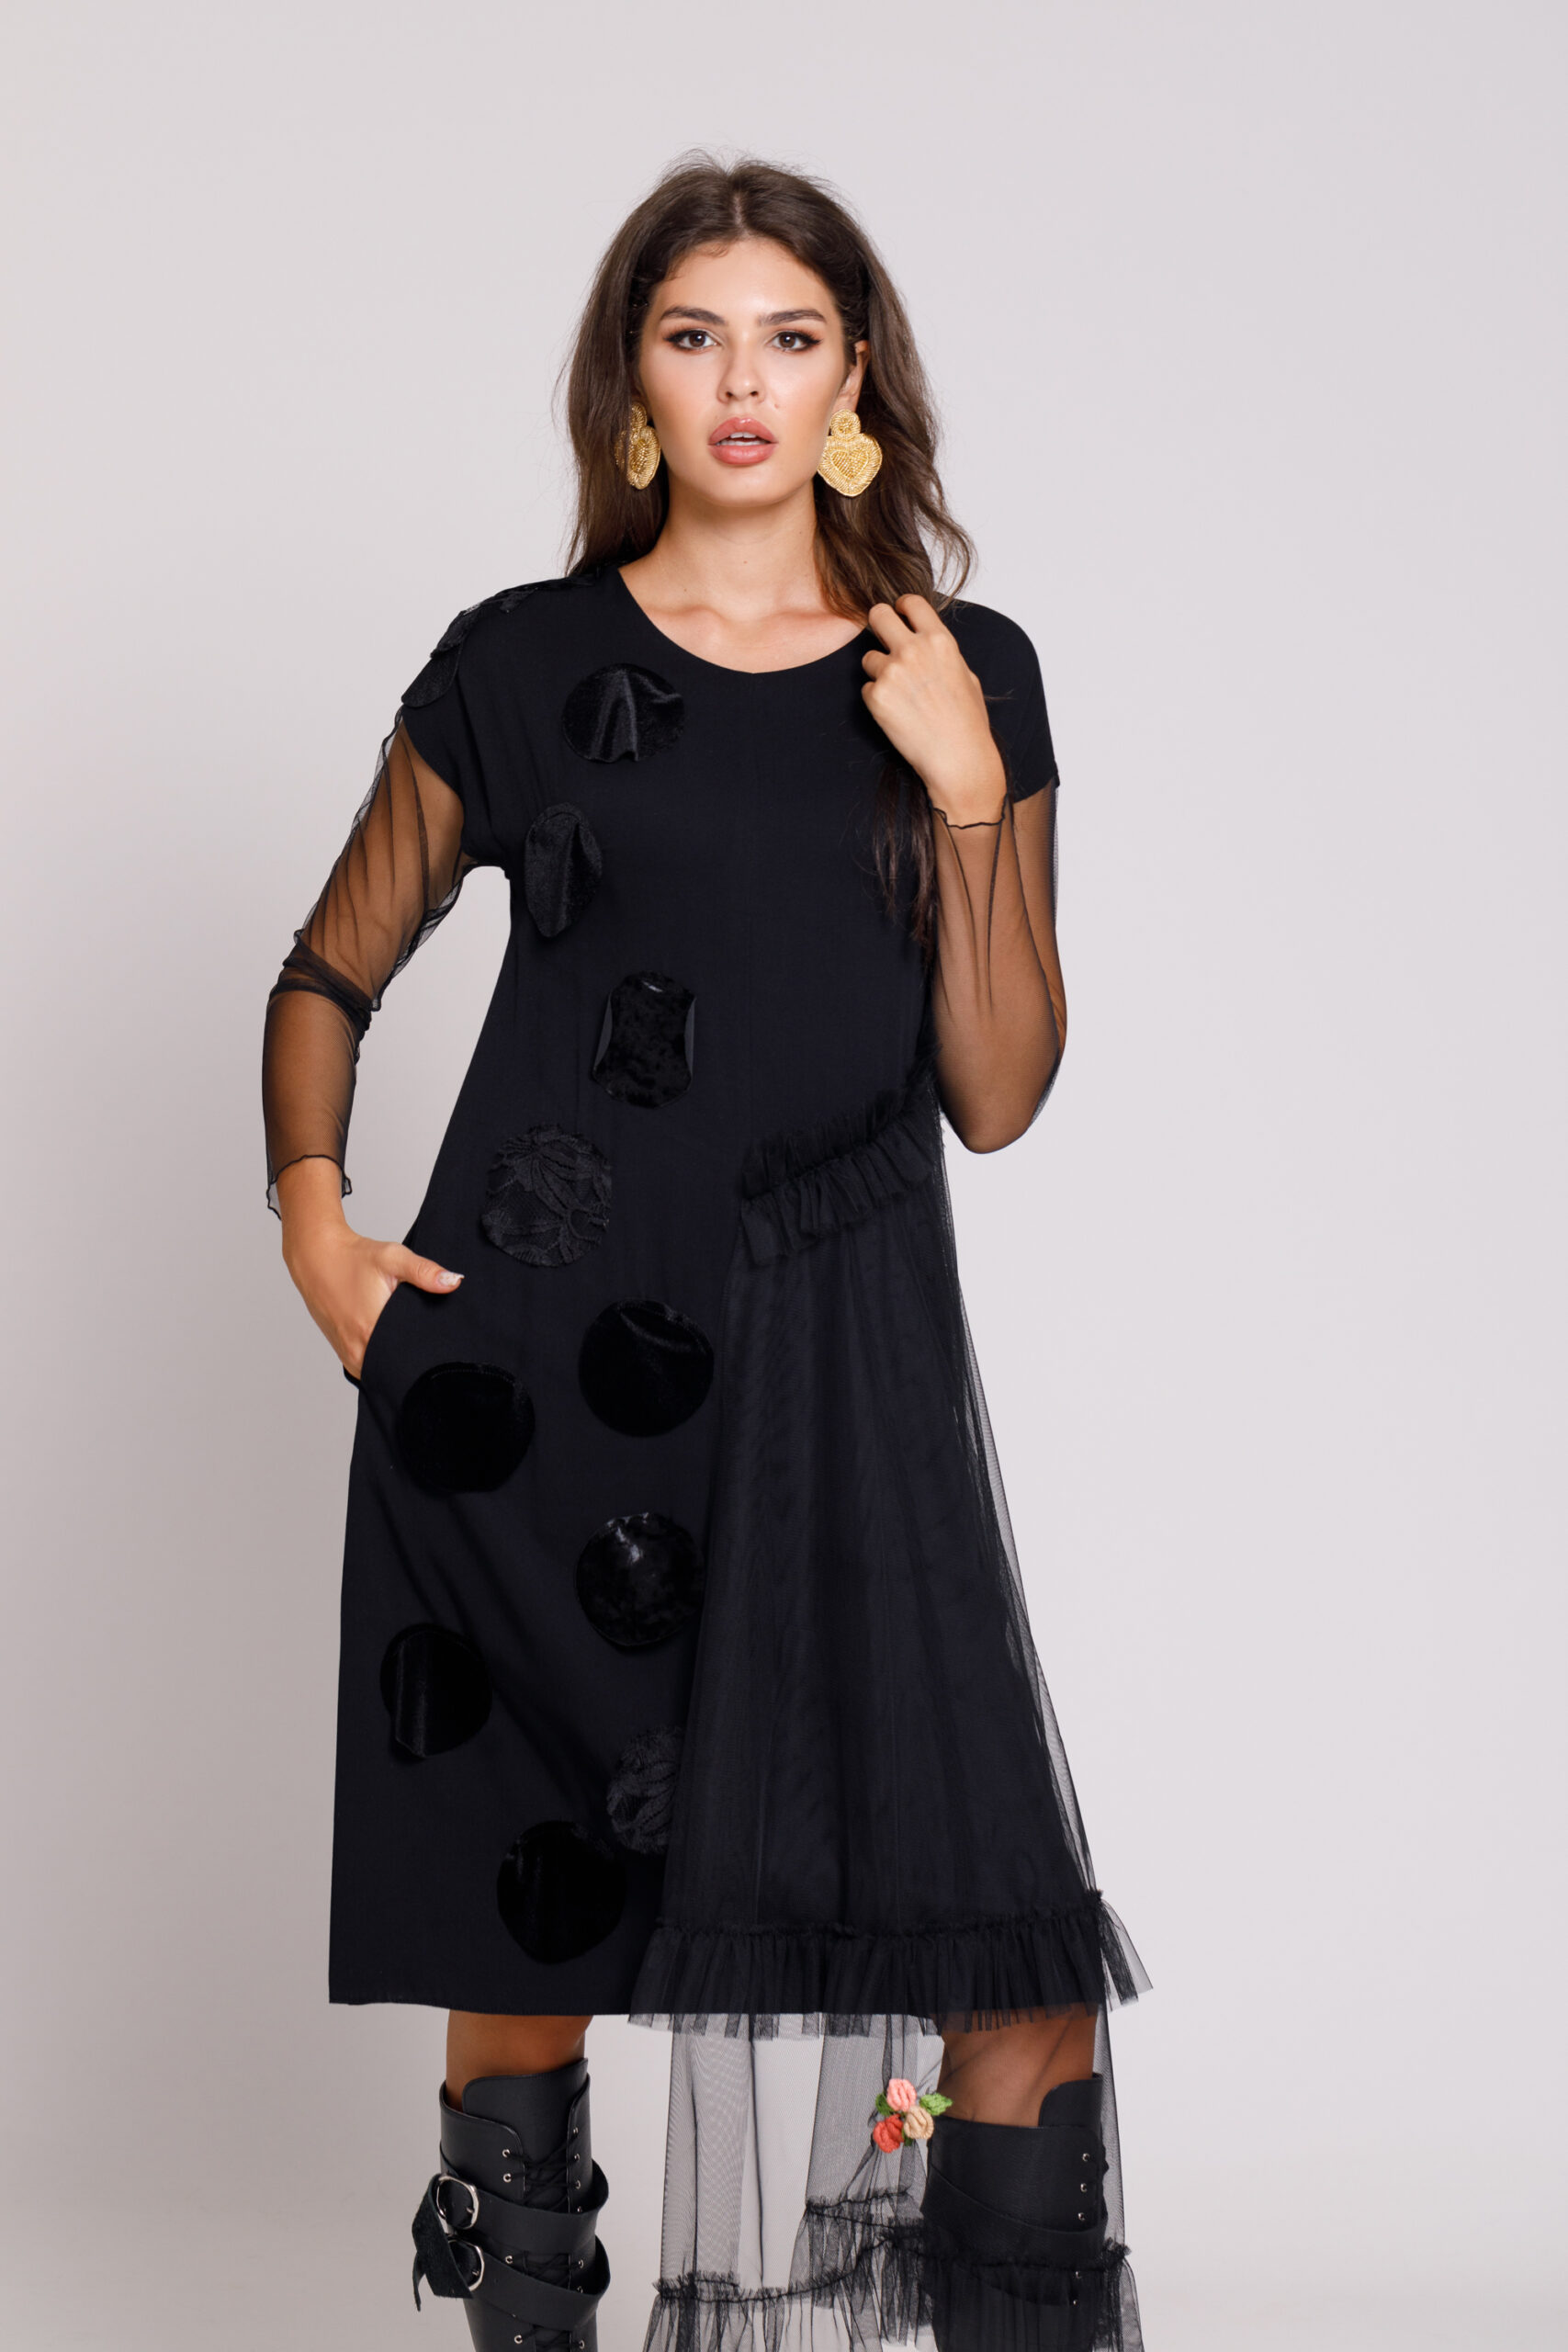 RAELLE elegant black viscose and tulle dress. Natural fabrics, original design, handmade embroidery